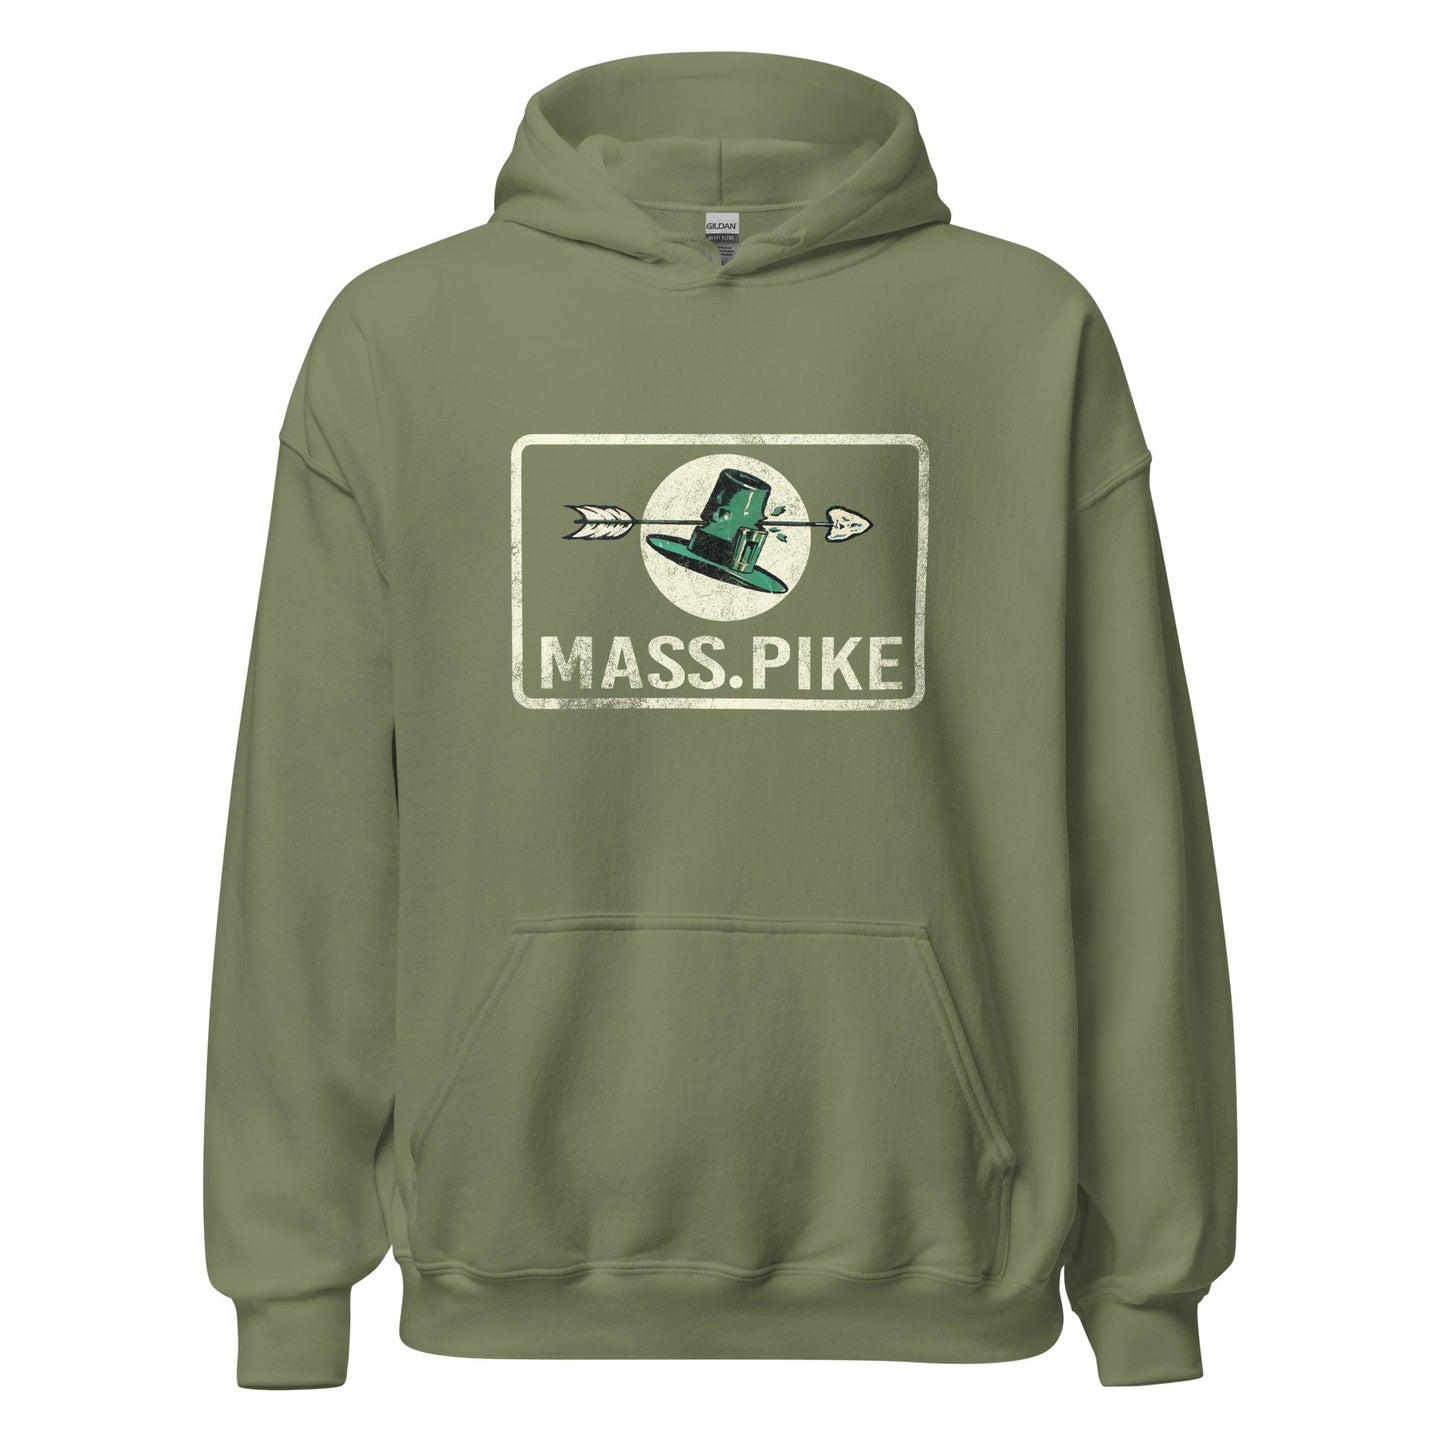 Mass Pike Vintage Hoodie - Retro 1960s Massachusetts Turnpike Sweatshirt